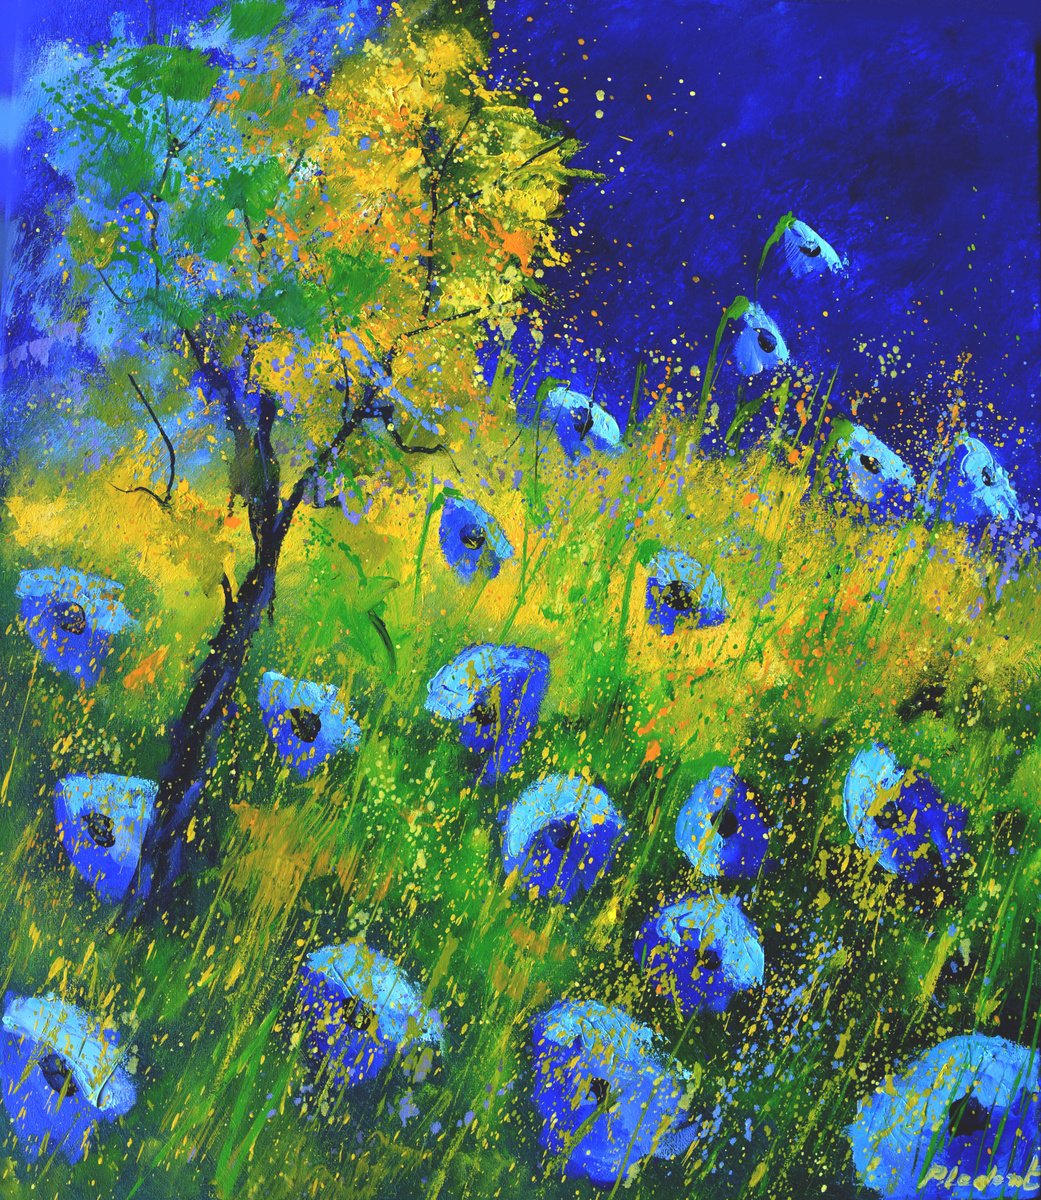 Blue poppies by Pol Henry Ledent